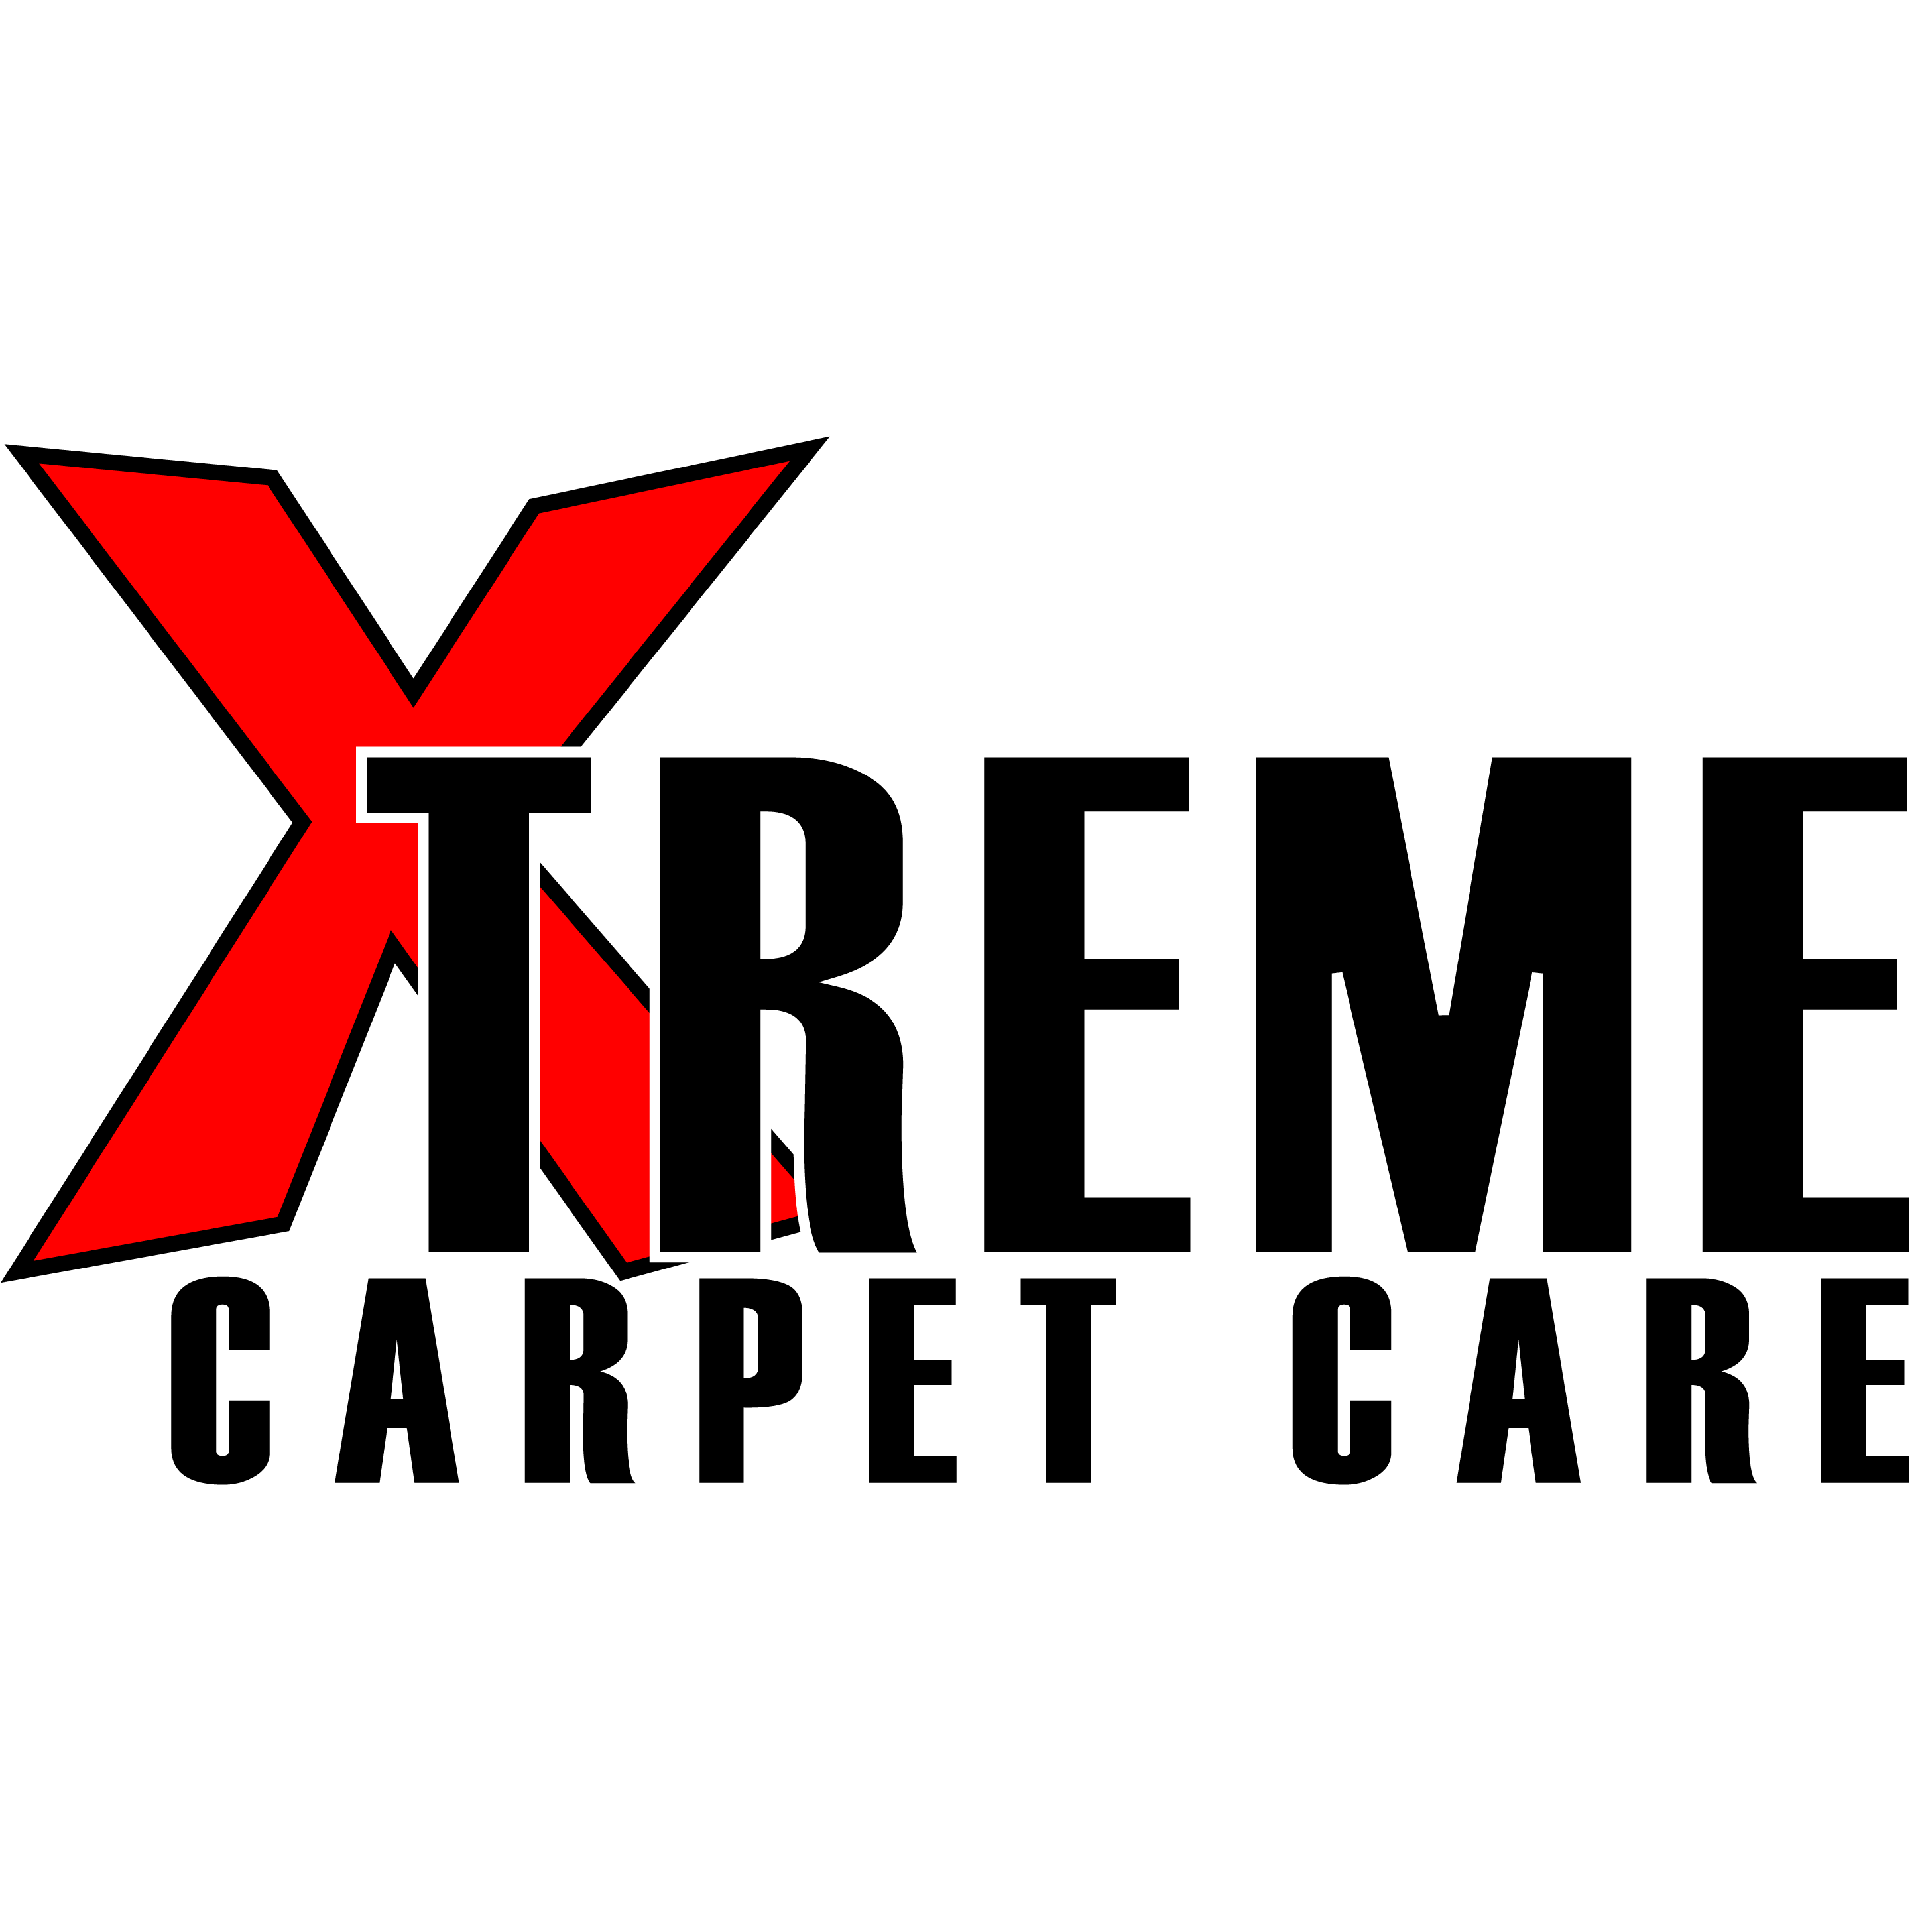 Xtreme Carpet Care